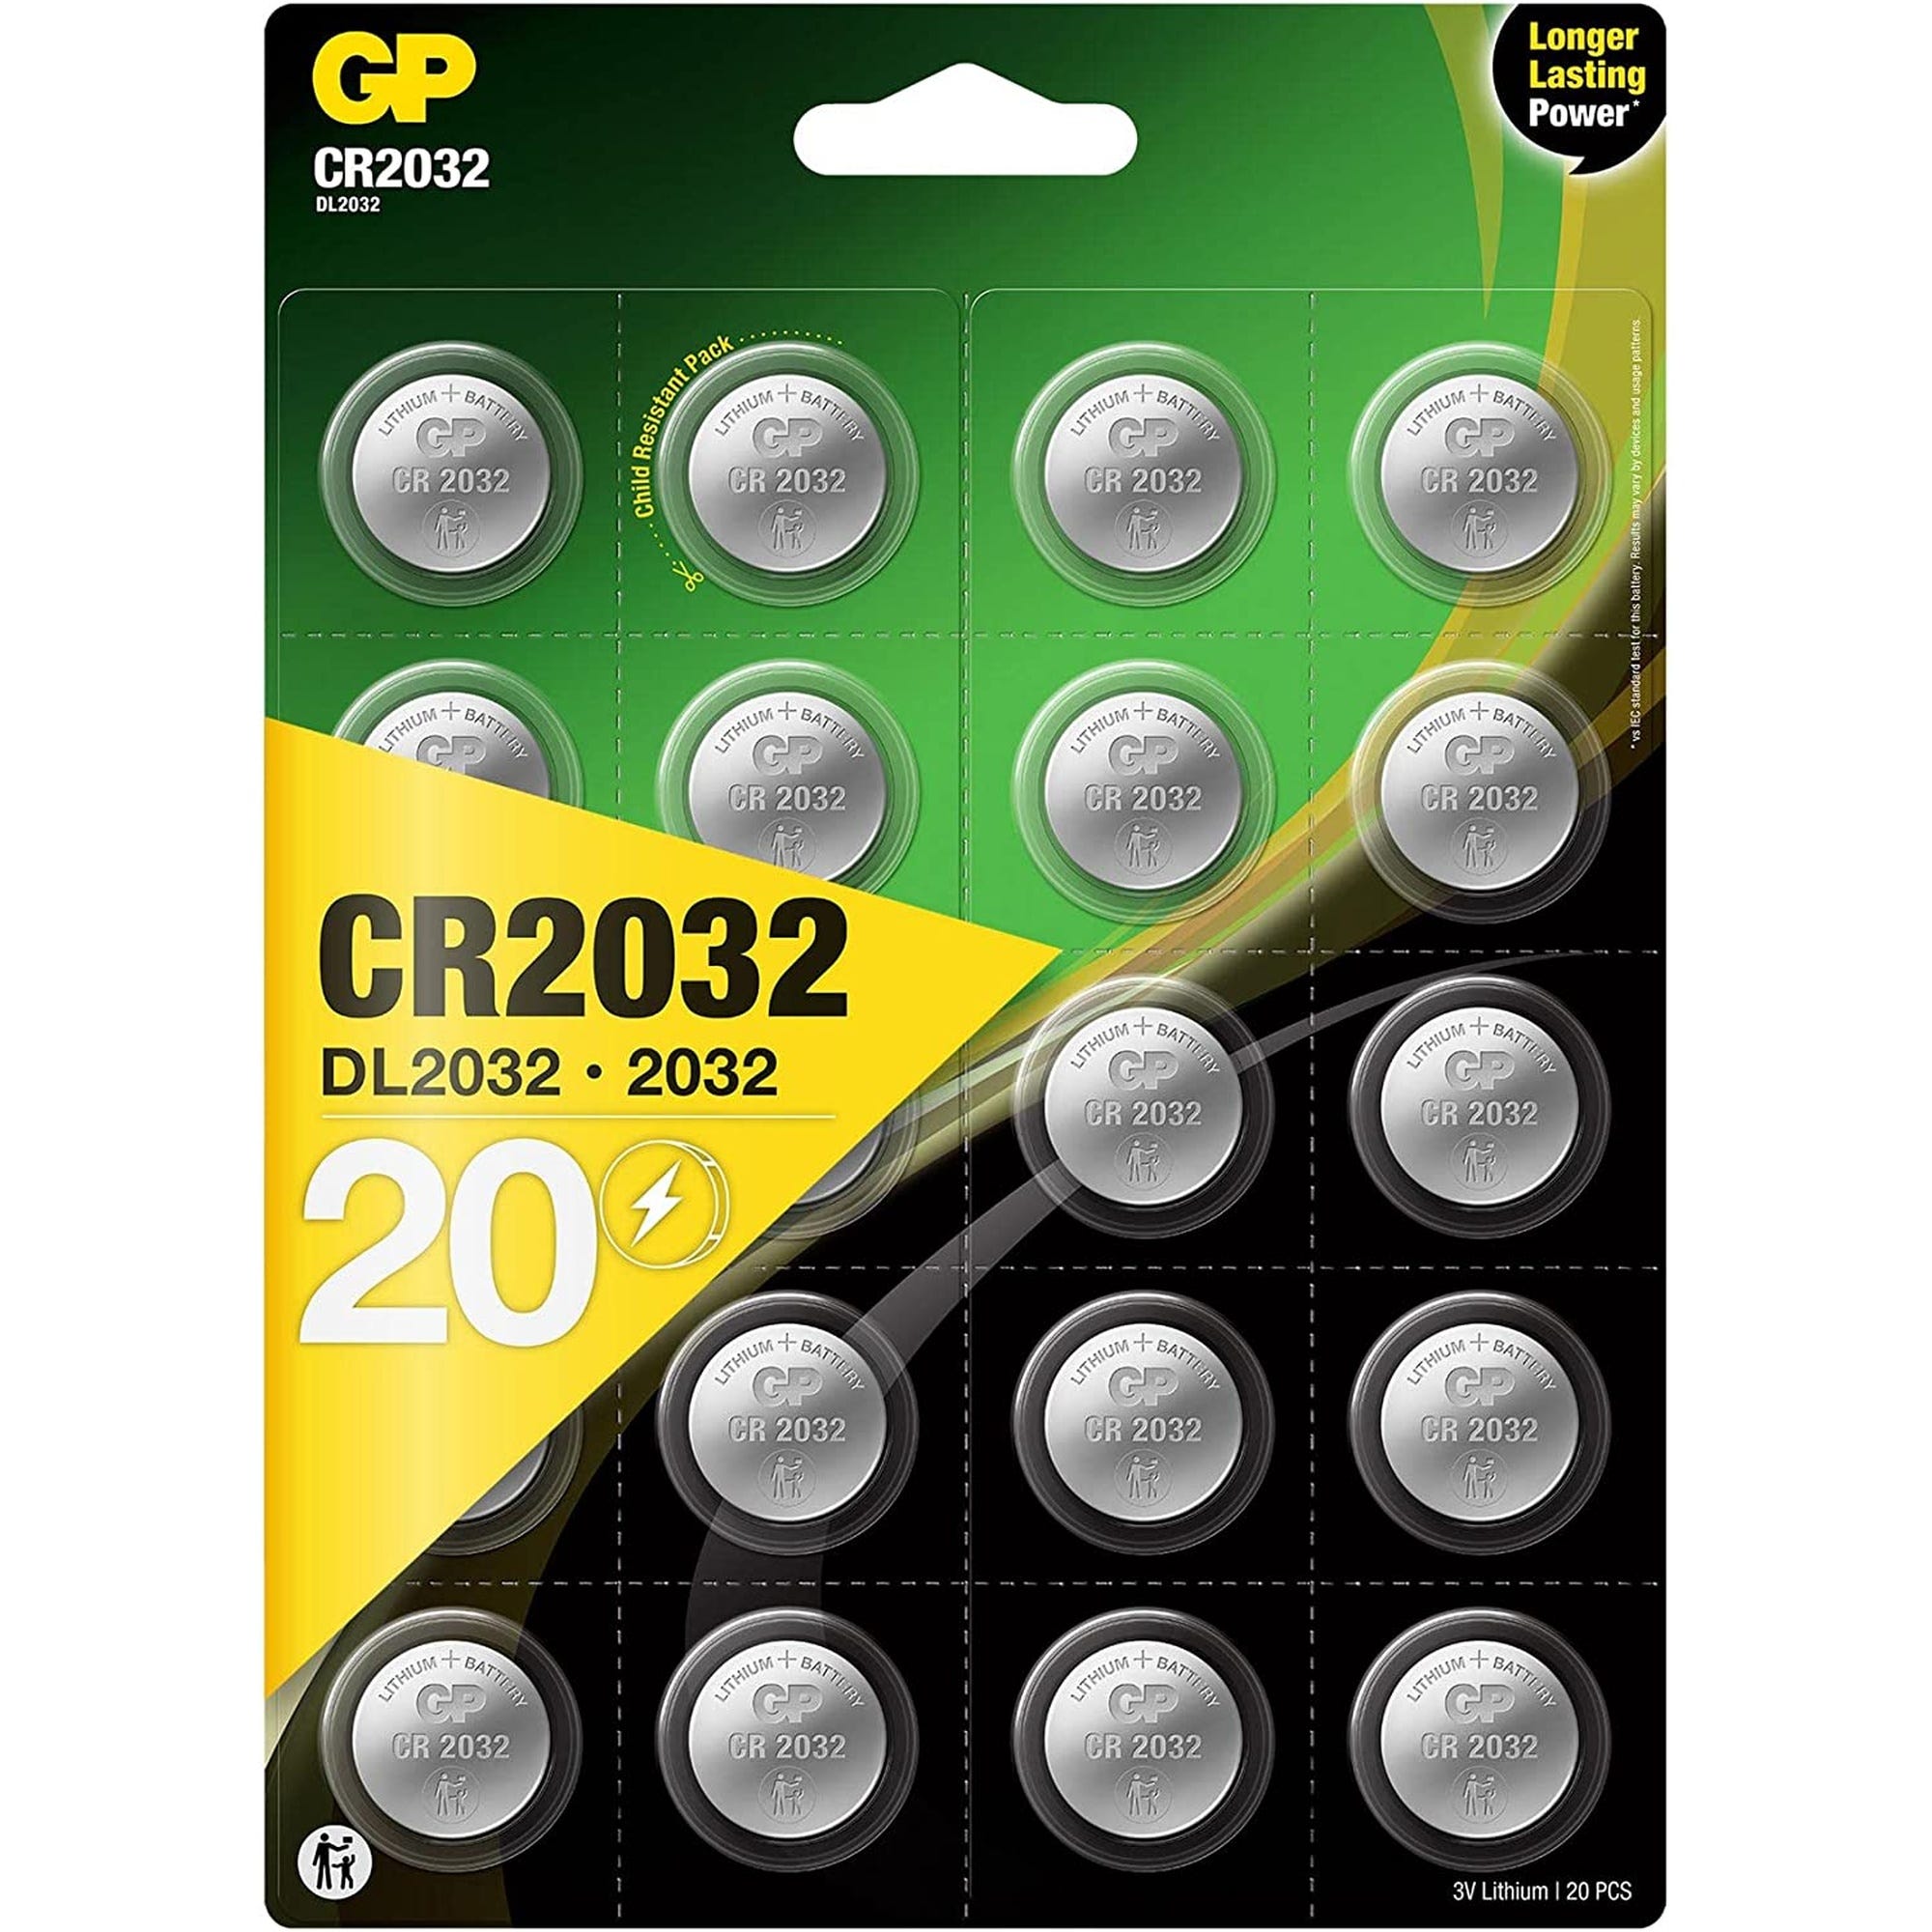 Pile bouton CR 2450 lithium GP Batteries 3 V 5 pc(s)